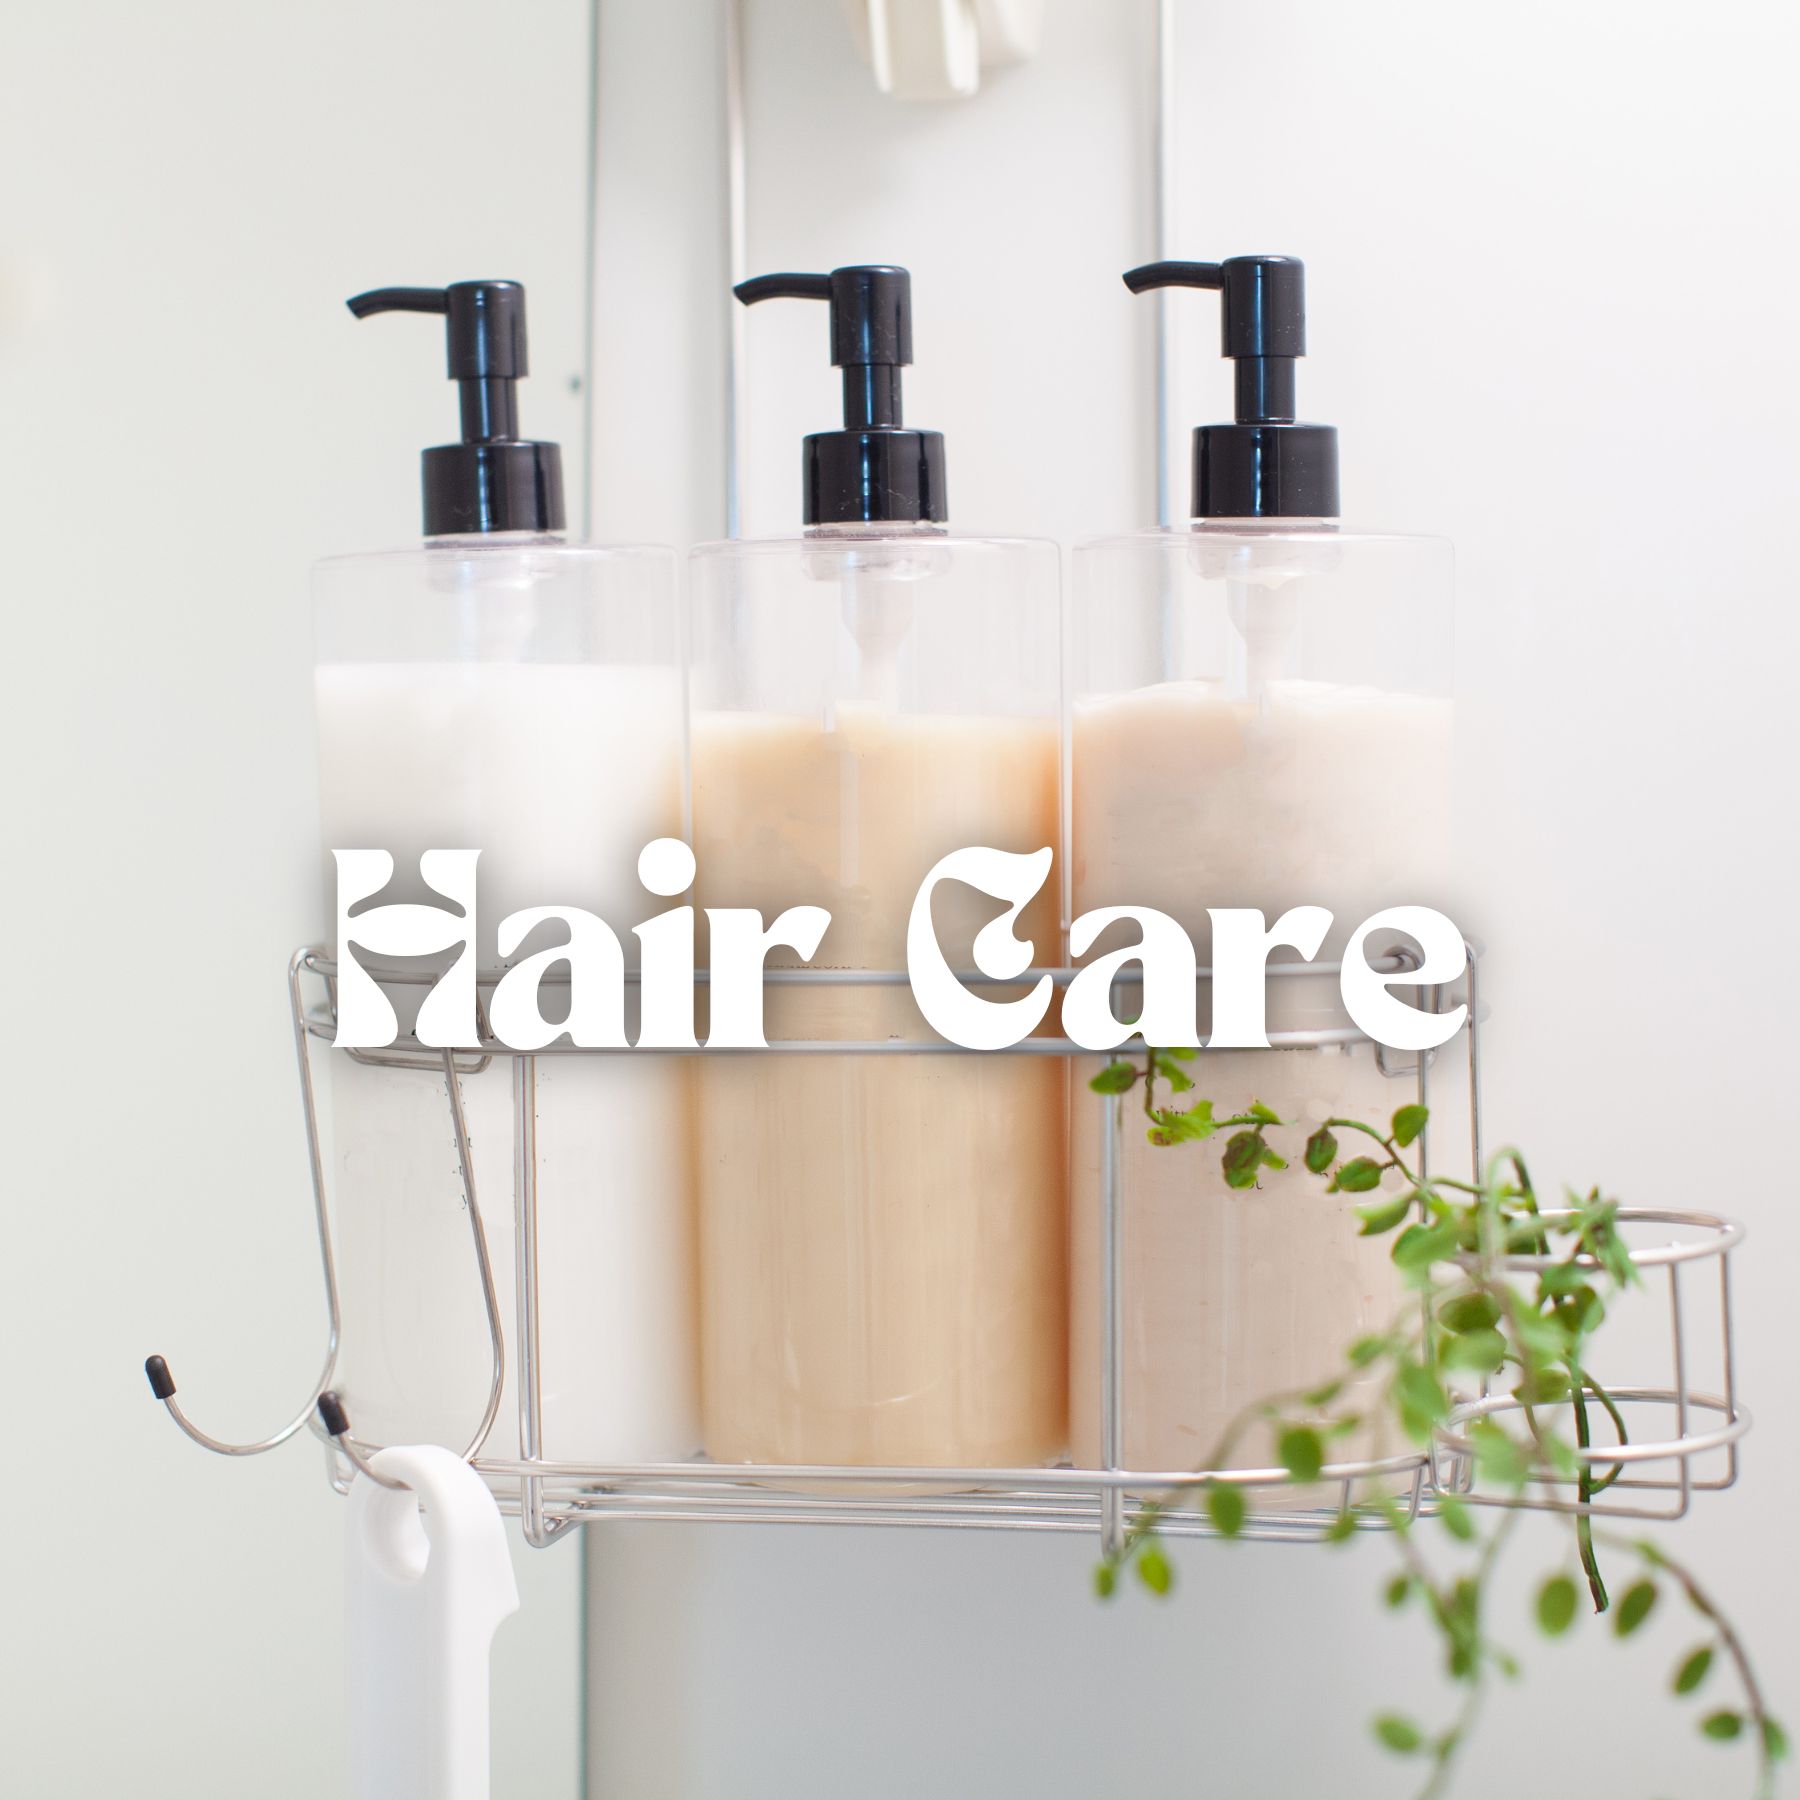 Decorative Image Says "Hair Care"